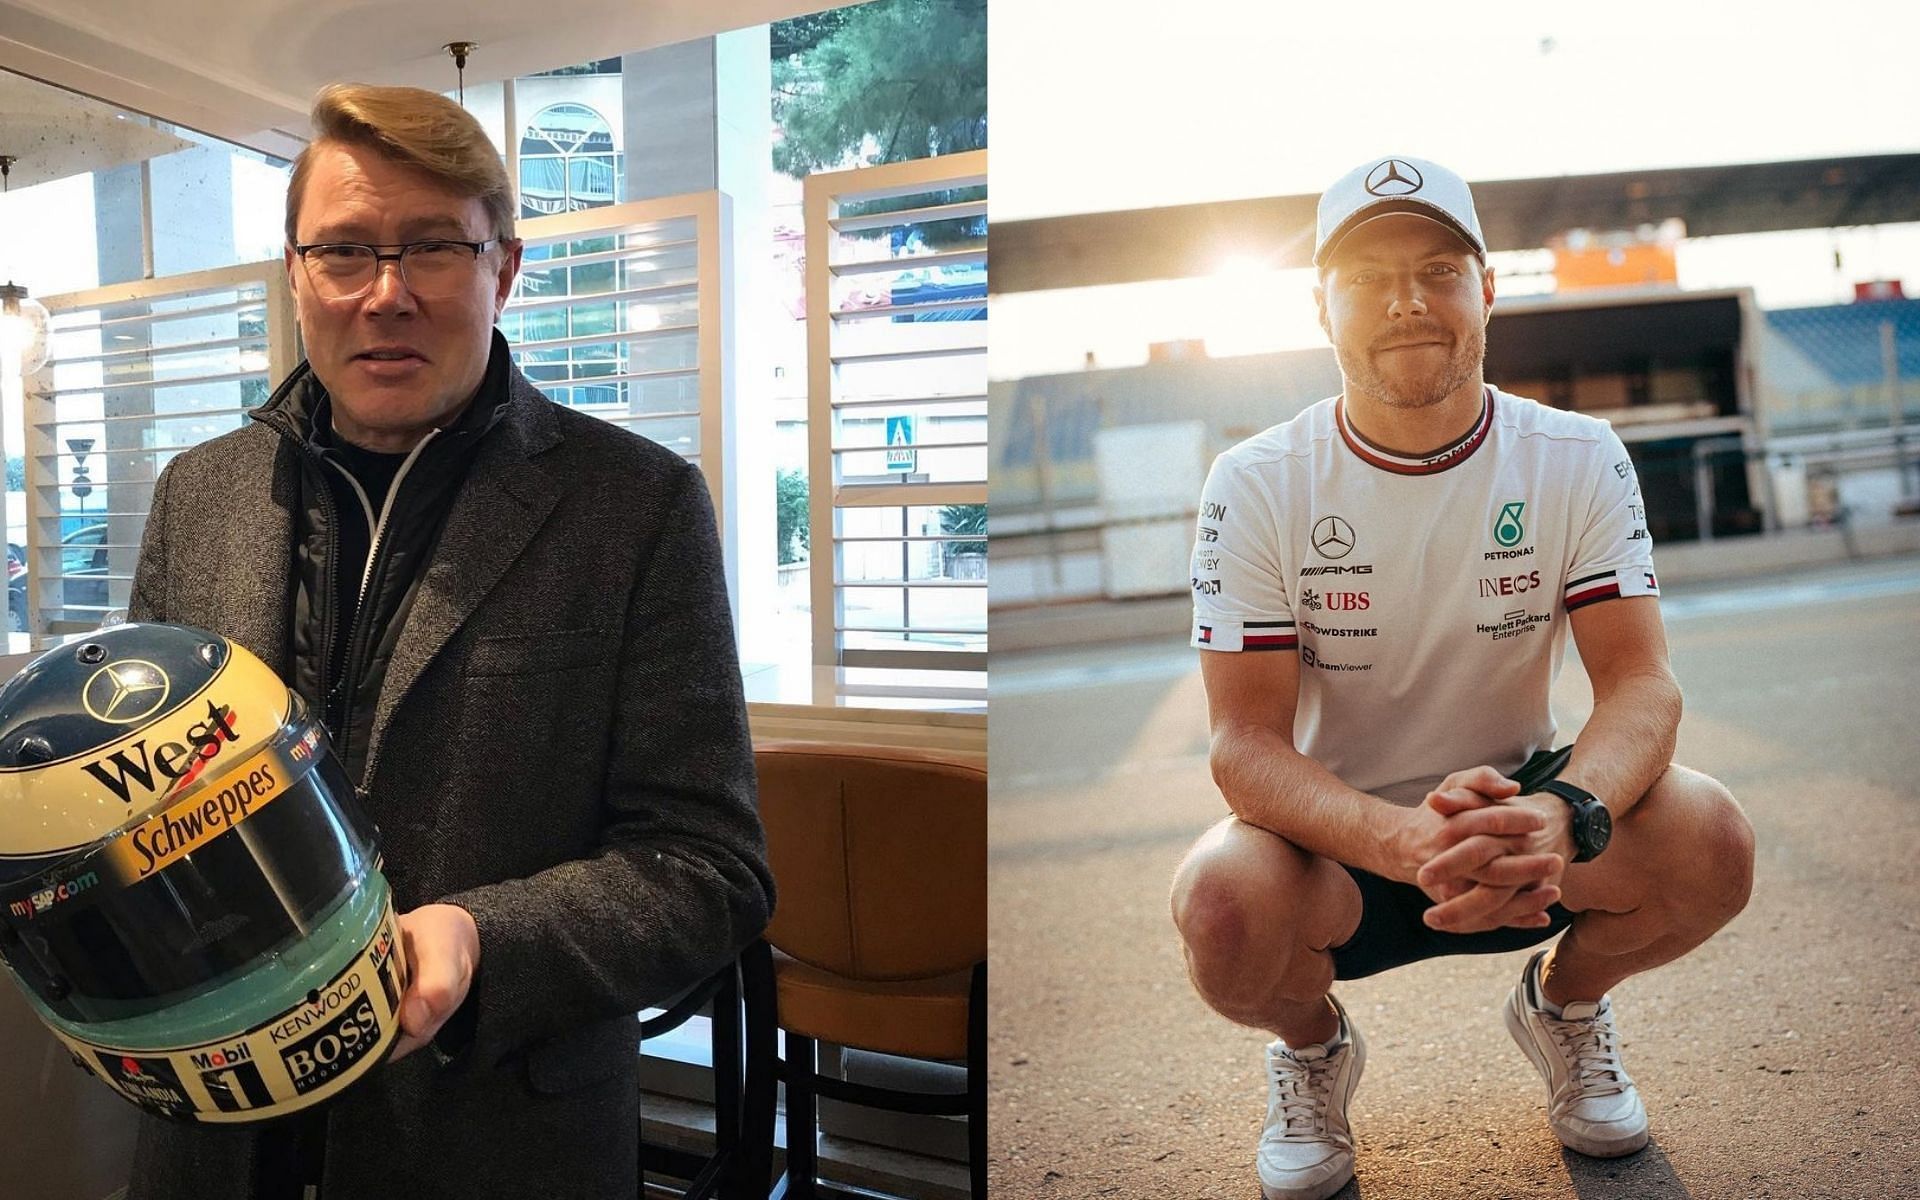 Mika Hakkinen (left) and Valtteri Bottas (right) (Image Courtesy: @f1mikahakkinen and @valtteribottas on Instagram)